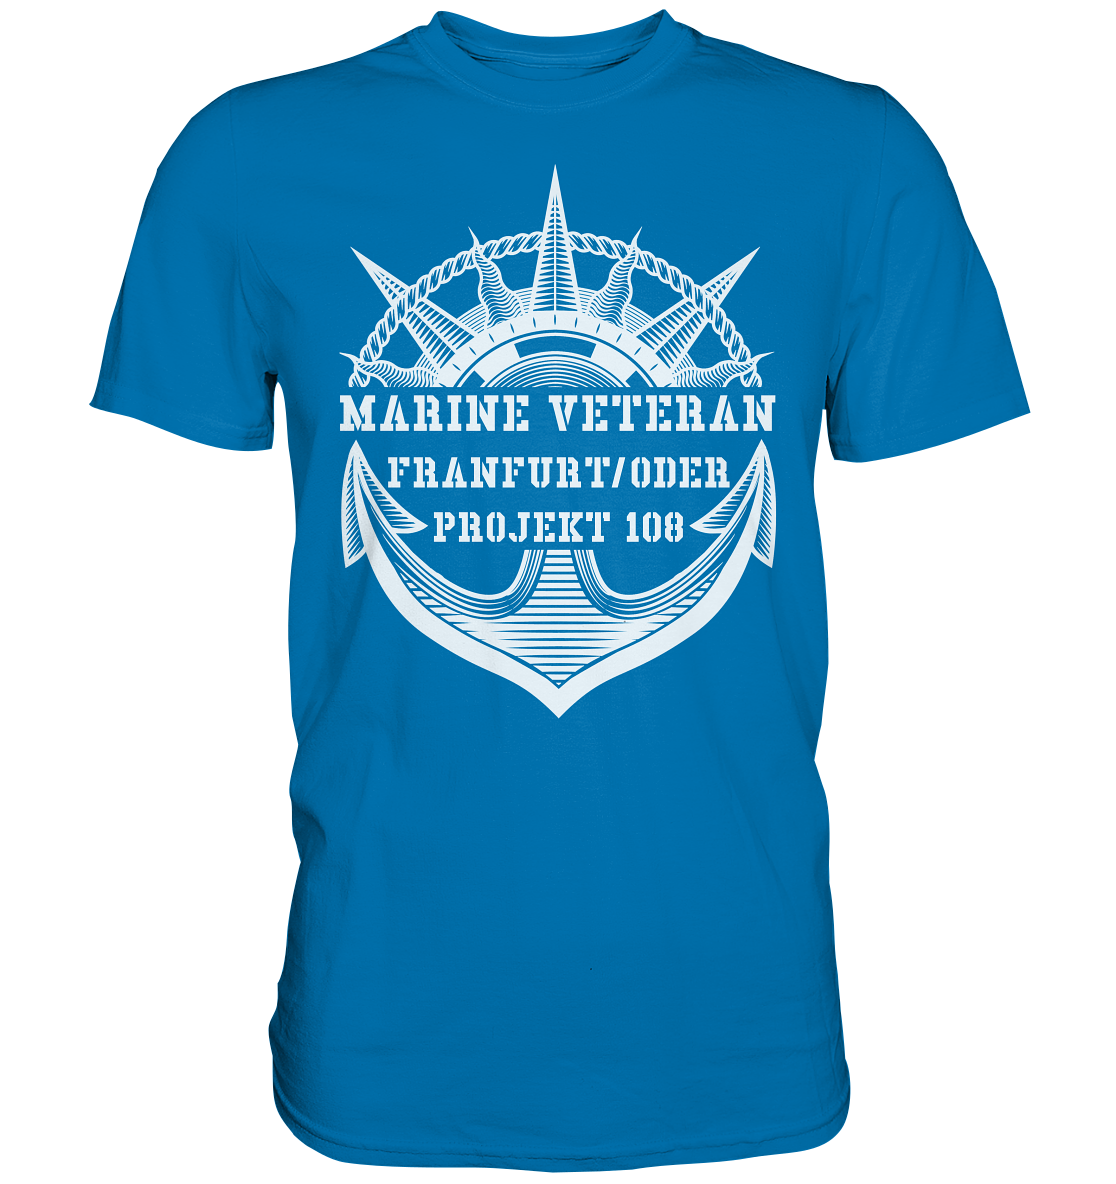 Projekt 108 FRANKFURT/ODER Marine Veteran - Premium Shirt